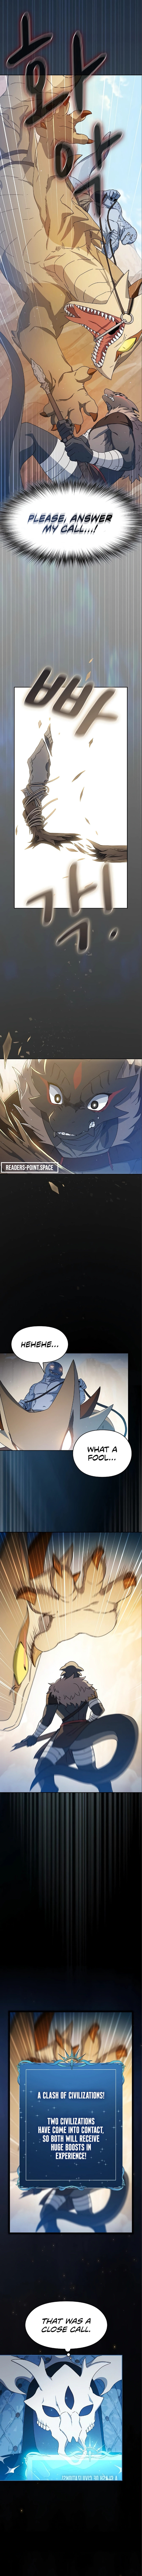 The Nebula’s Civilization - Chapter 7 Page 2